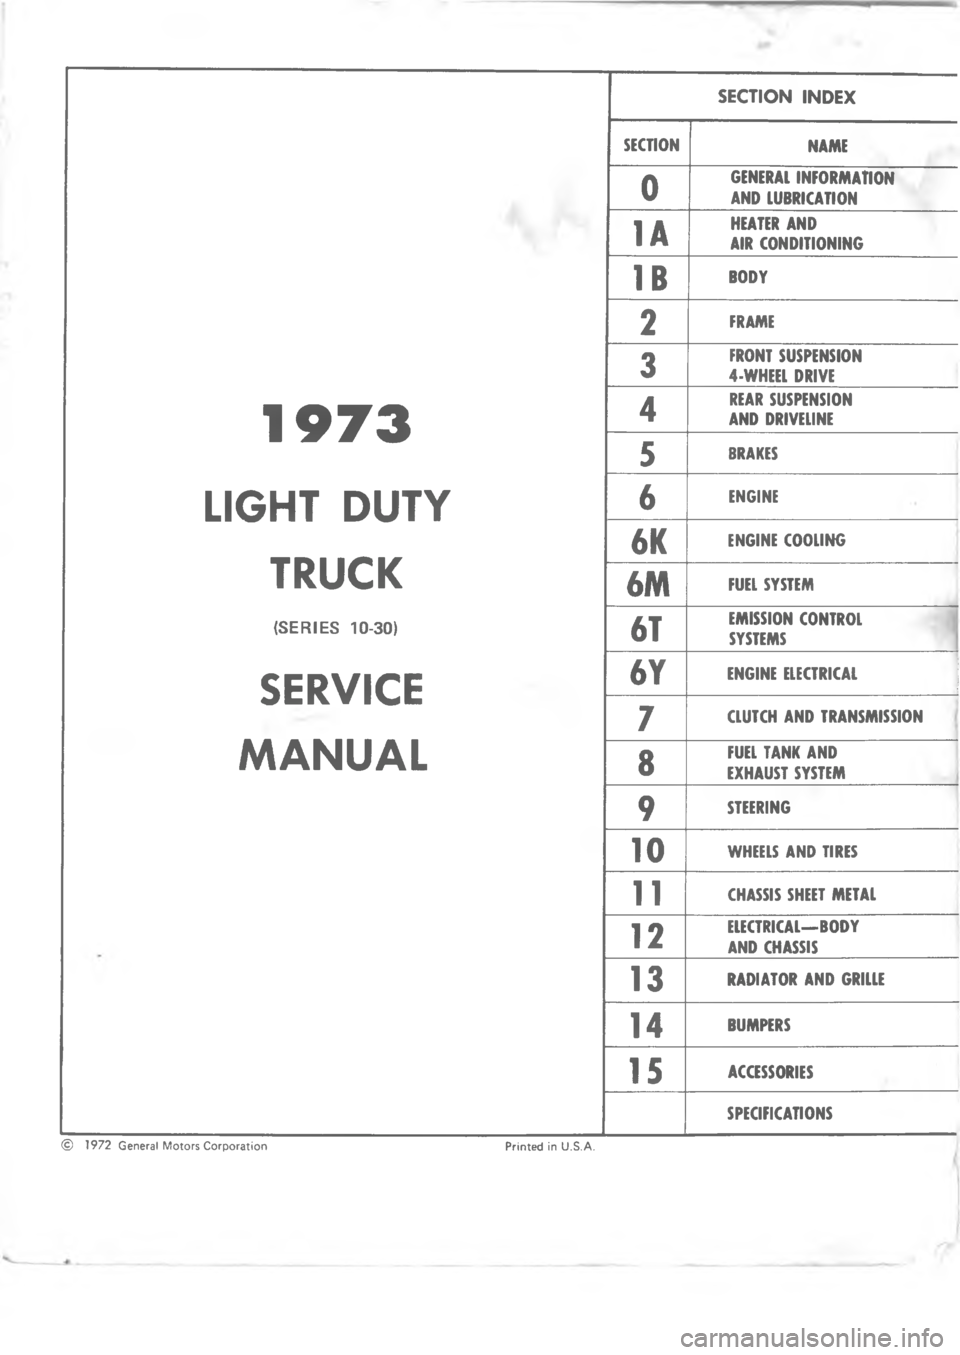 CHEVROLET LIGHT DUTY TRUCK 1973  Service Manual           	  

   












 
"
"

"

"

"
#

$

%









 